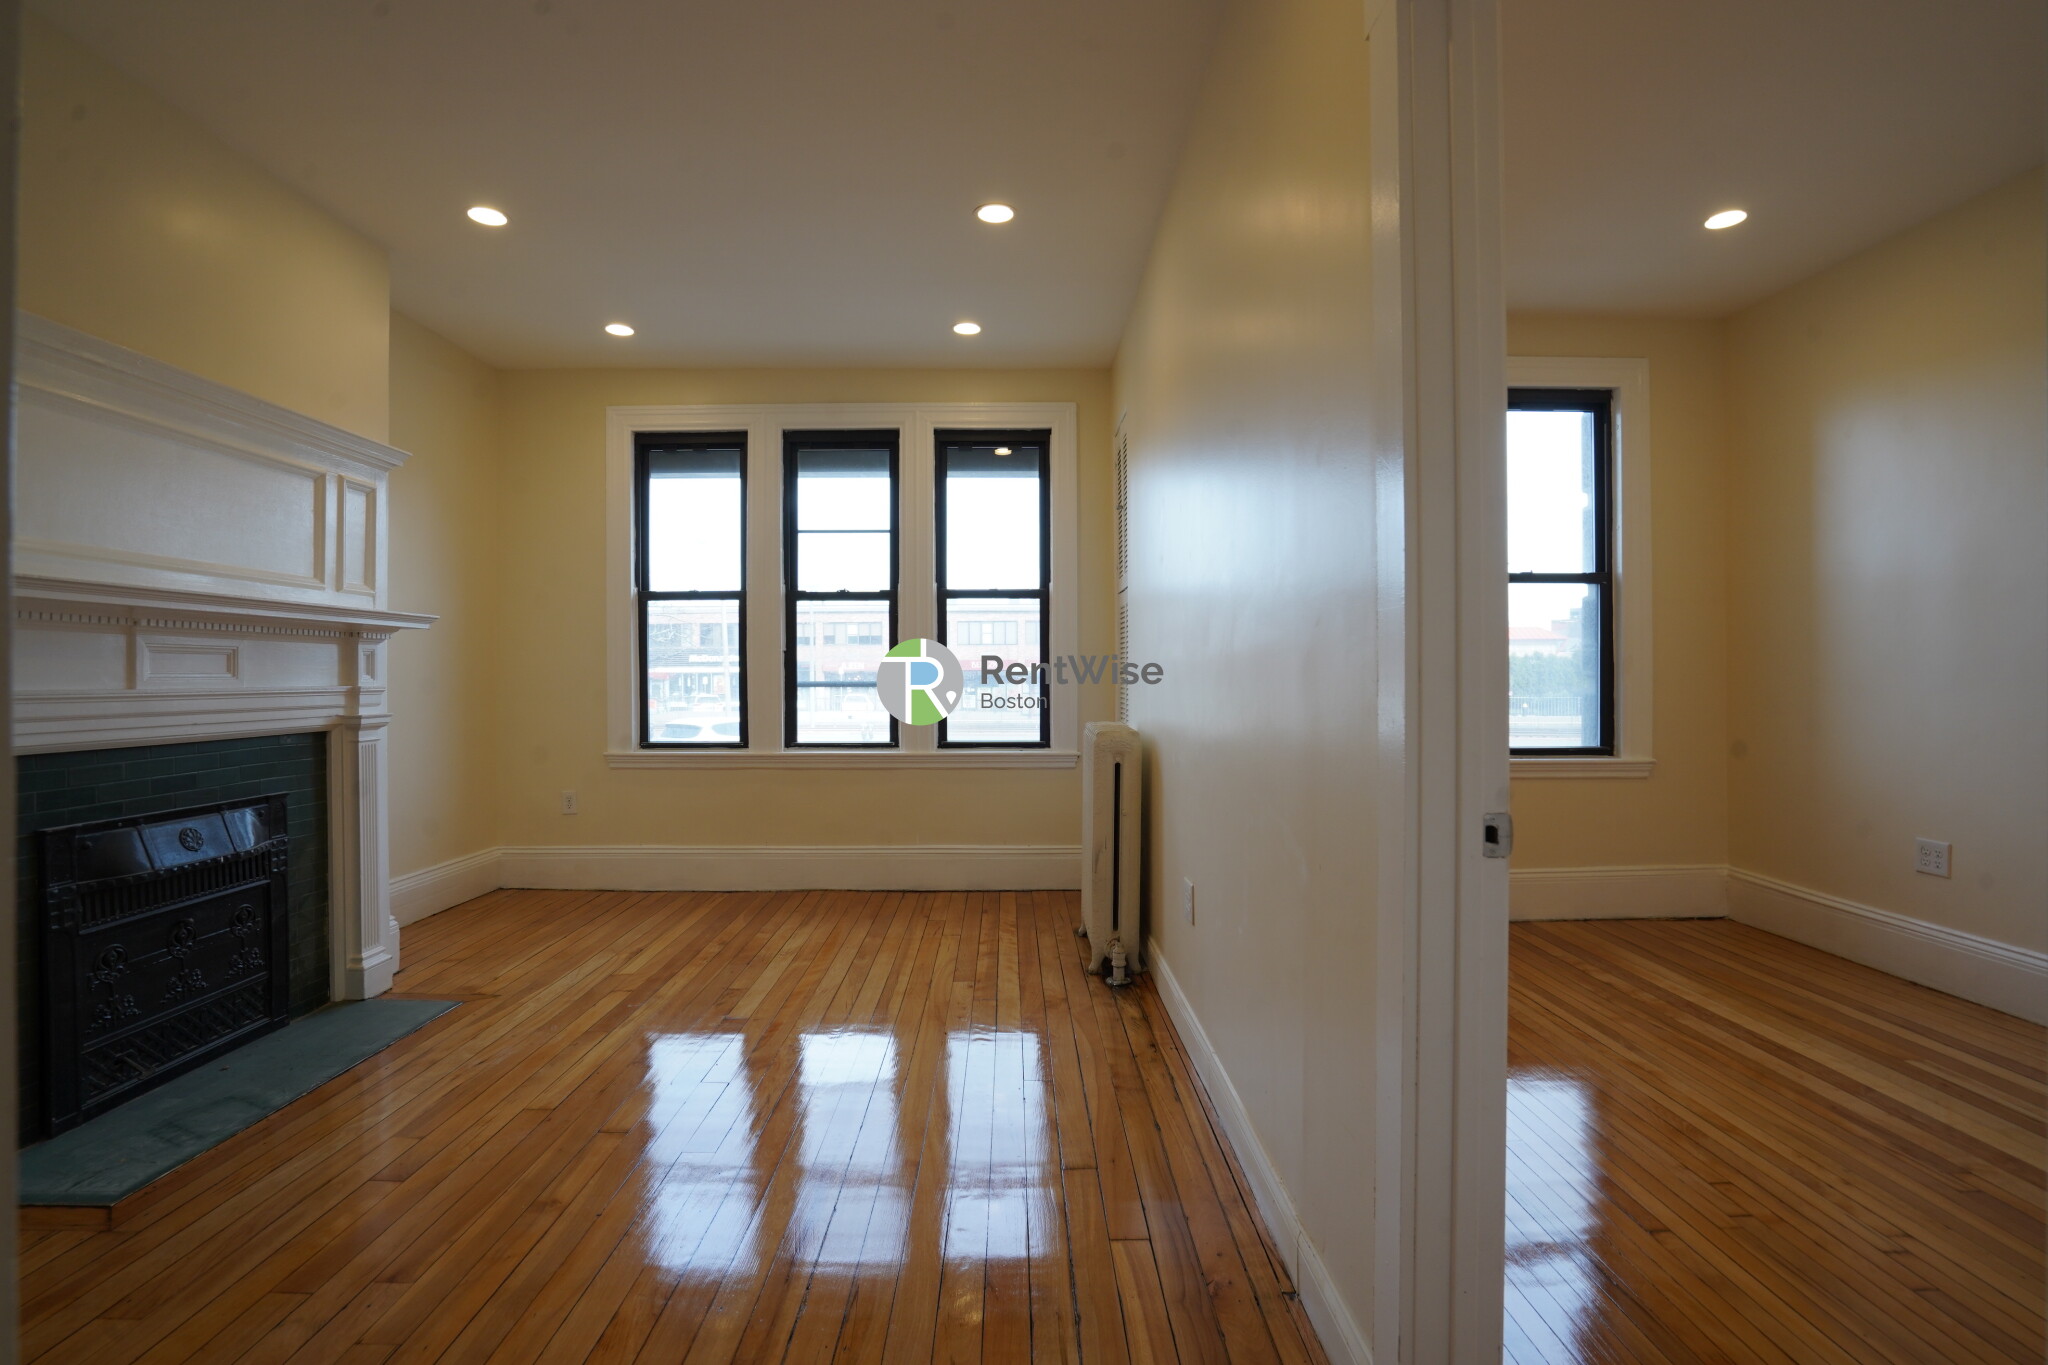 Photos of apartment on Webley St.,Boston MA 02134